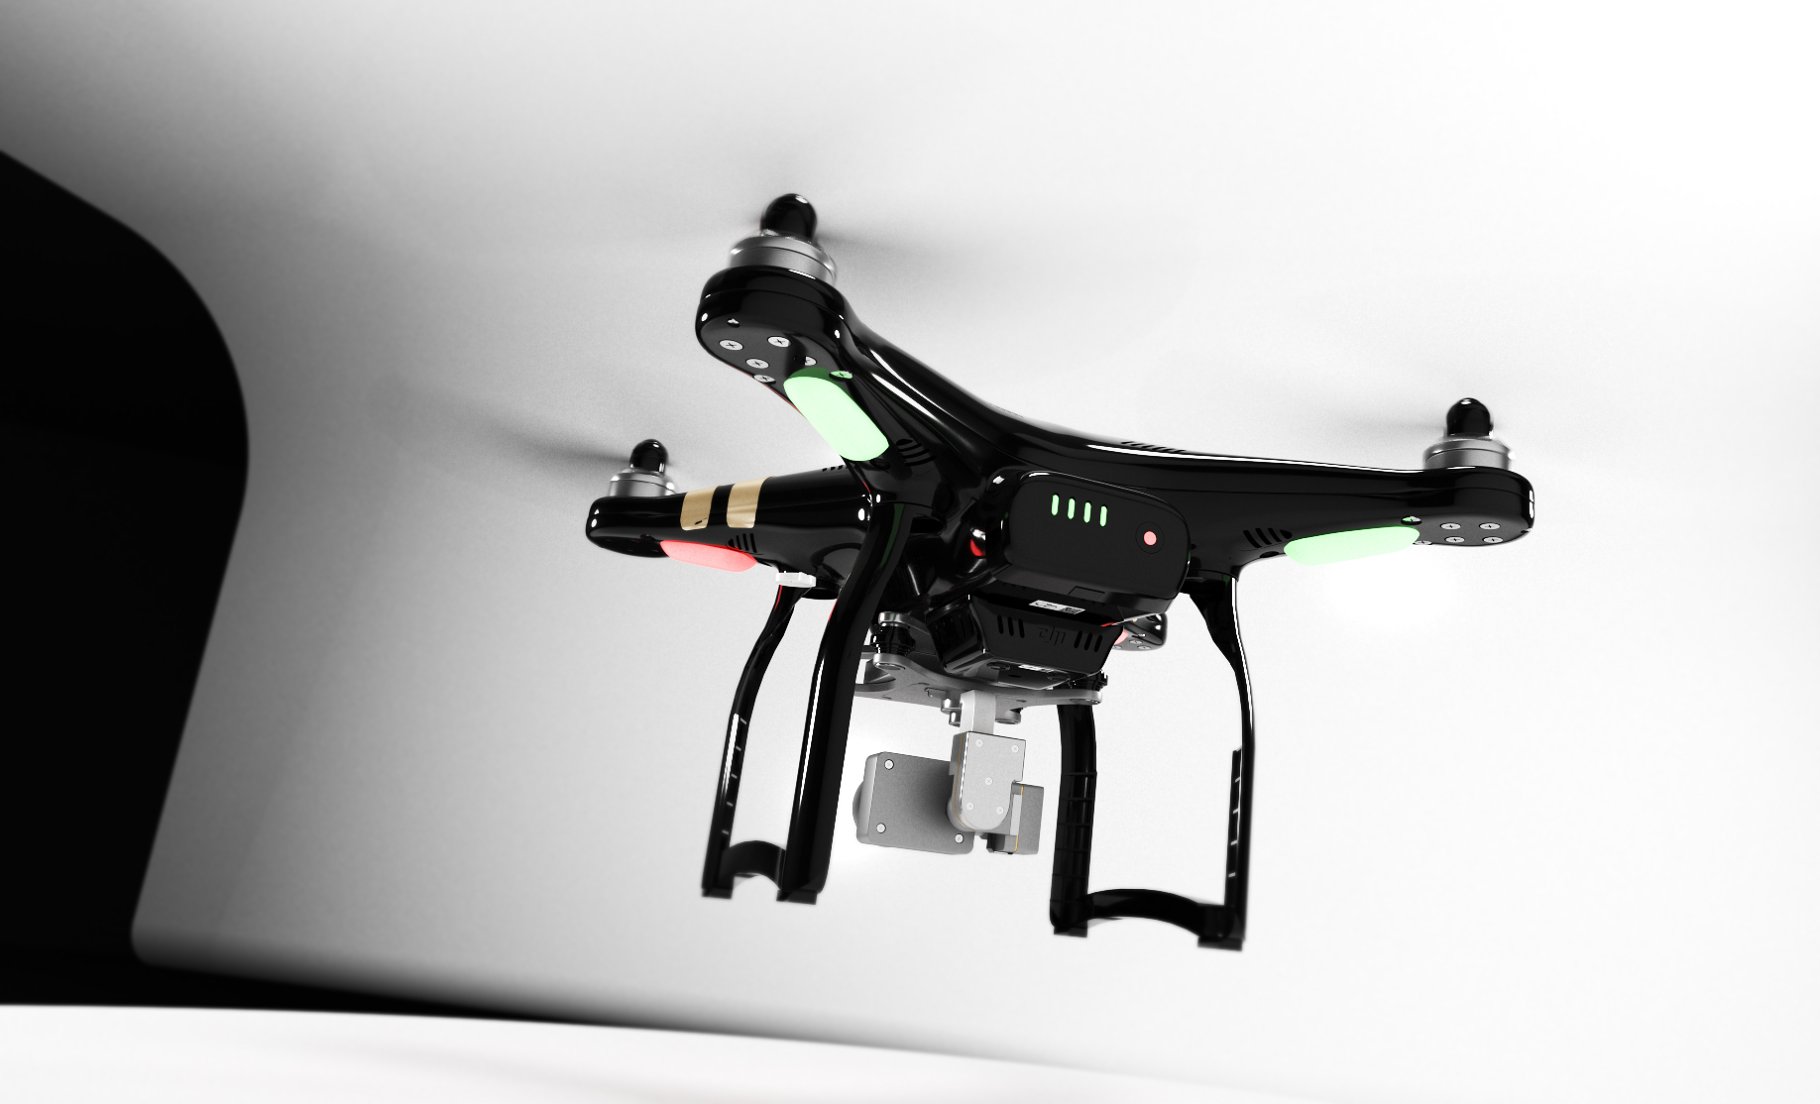 Charming image of the black DJI Phantom 3 drone